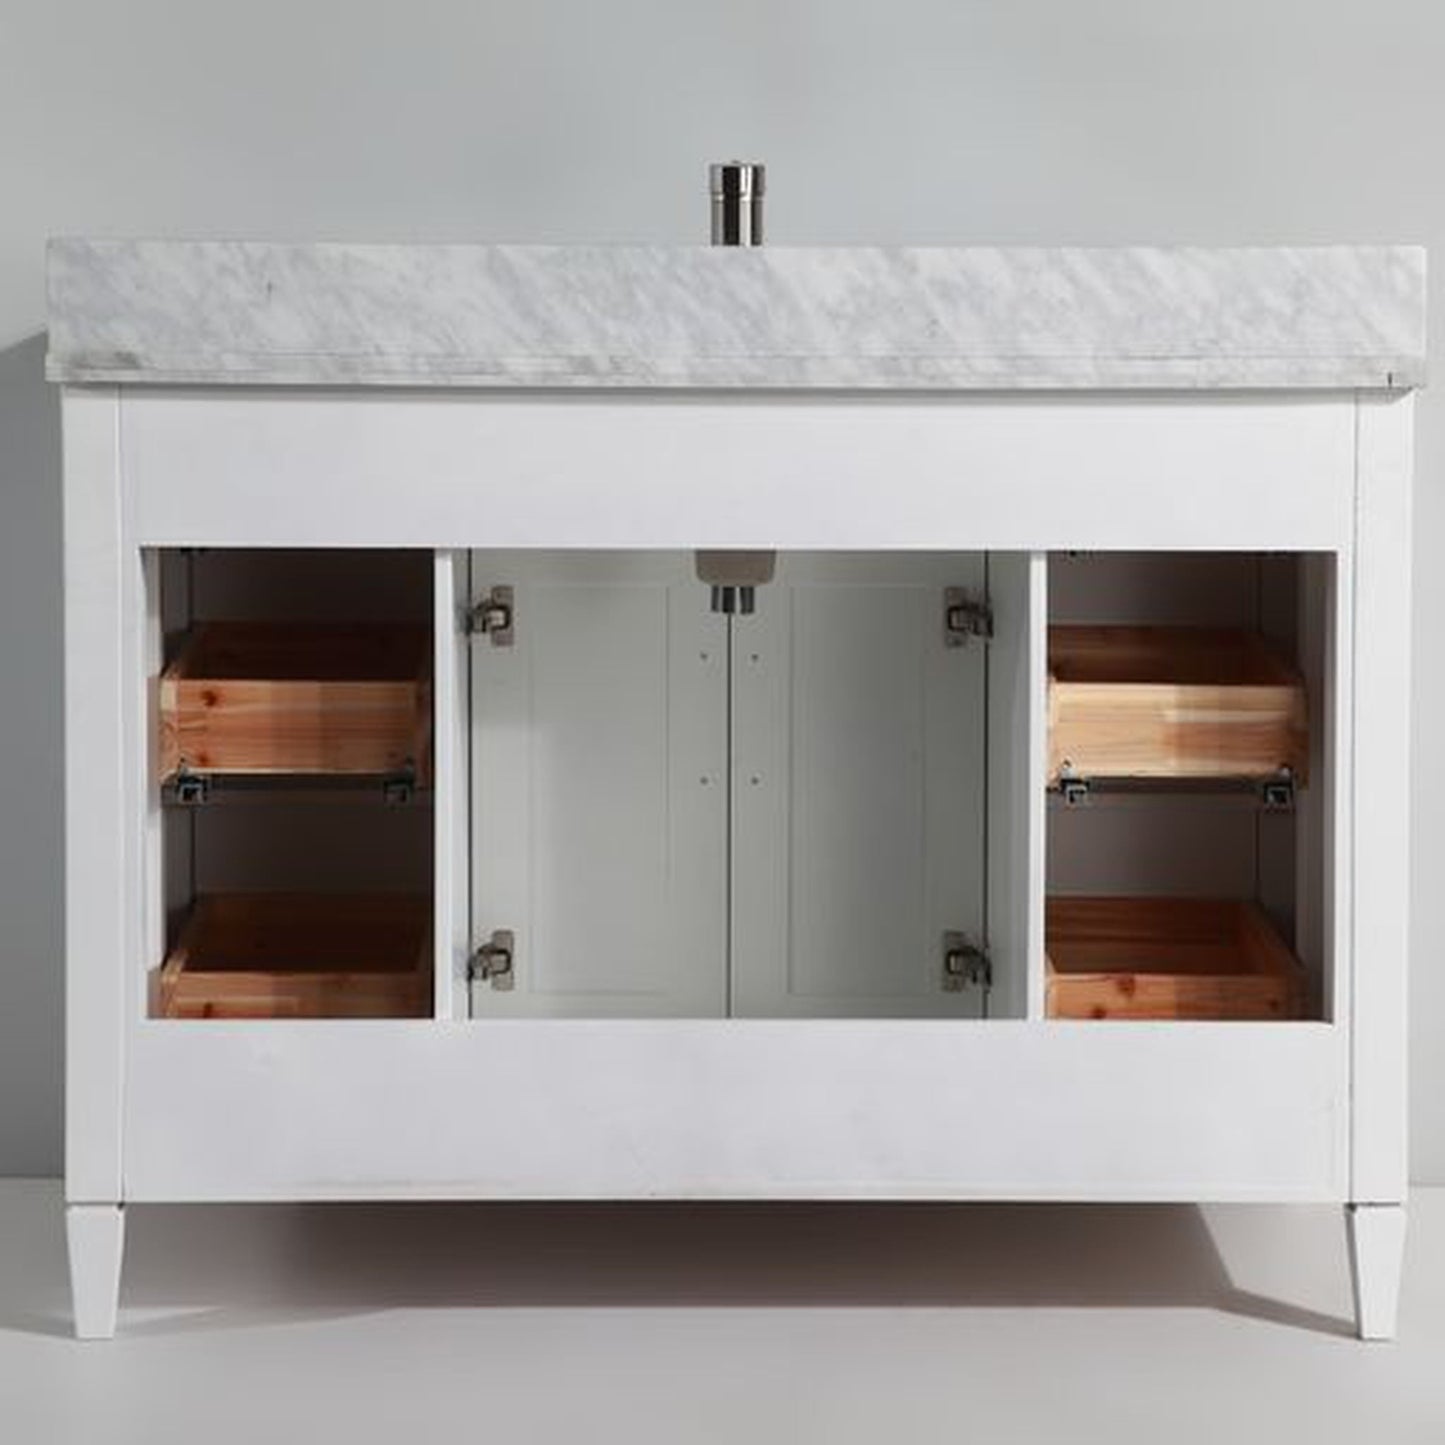 Vanity Art Savona 60" Single White Freestanding Modern Bathroom Vanity Set With Carrara Marble Top, Undermount Ceramic Sink, 7 Dovetail Drawer Cabinet, Backsplash and Mirror